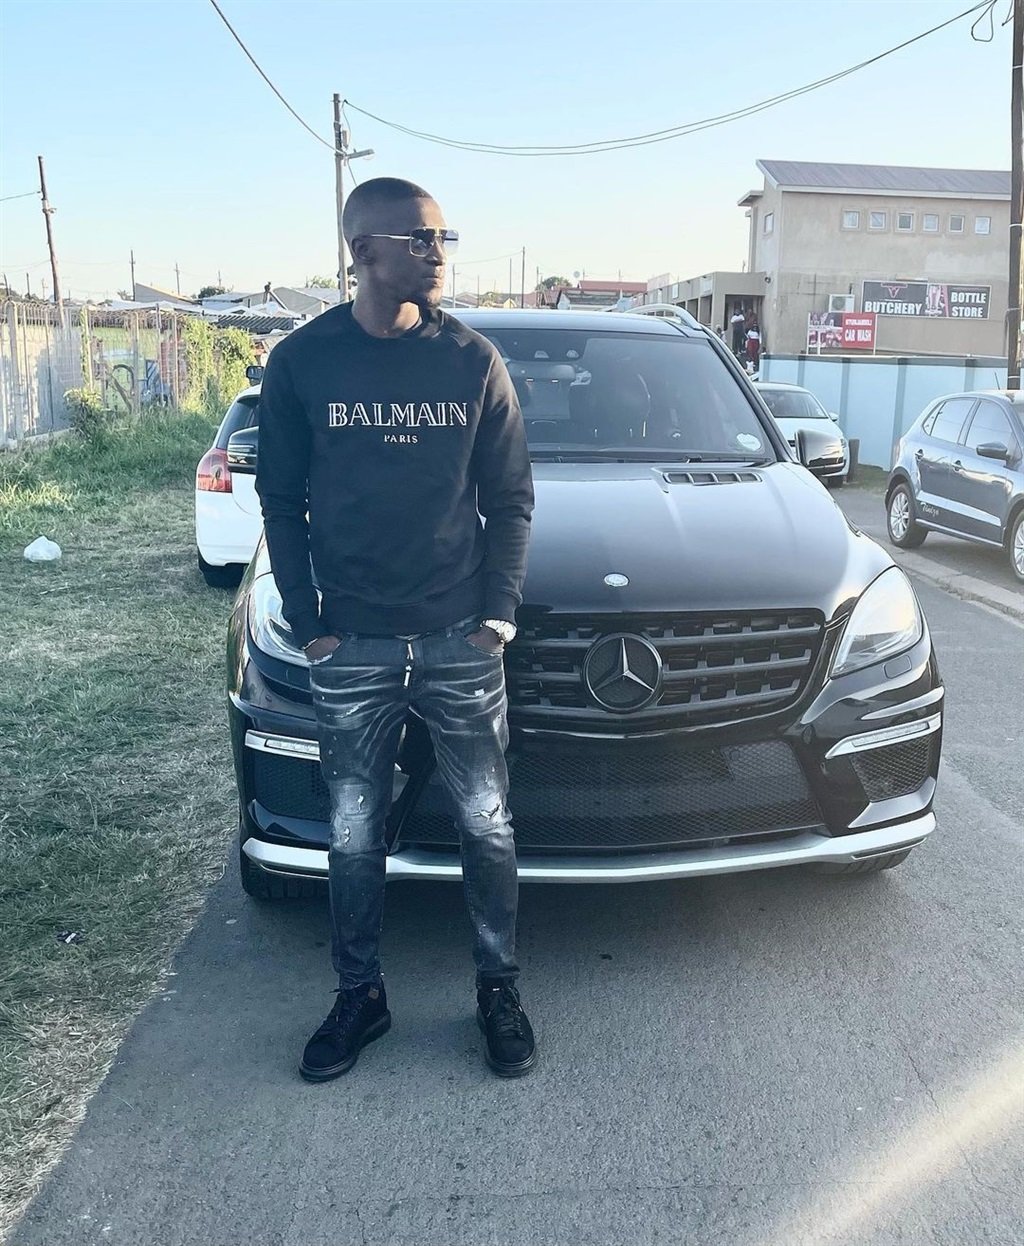 Siyanda Xulu is in a legal battle over his home. Instagram